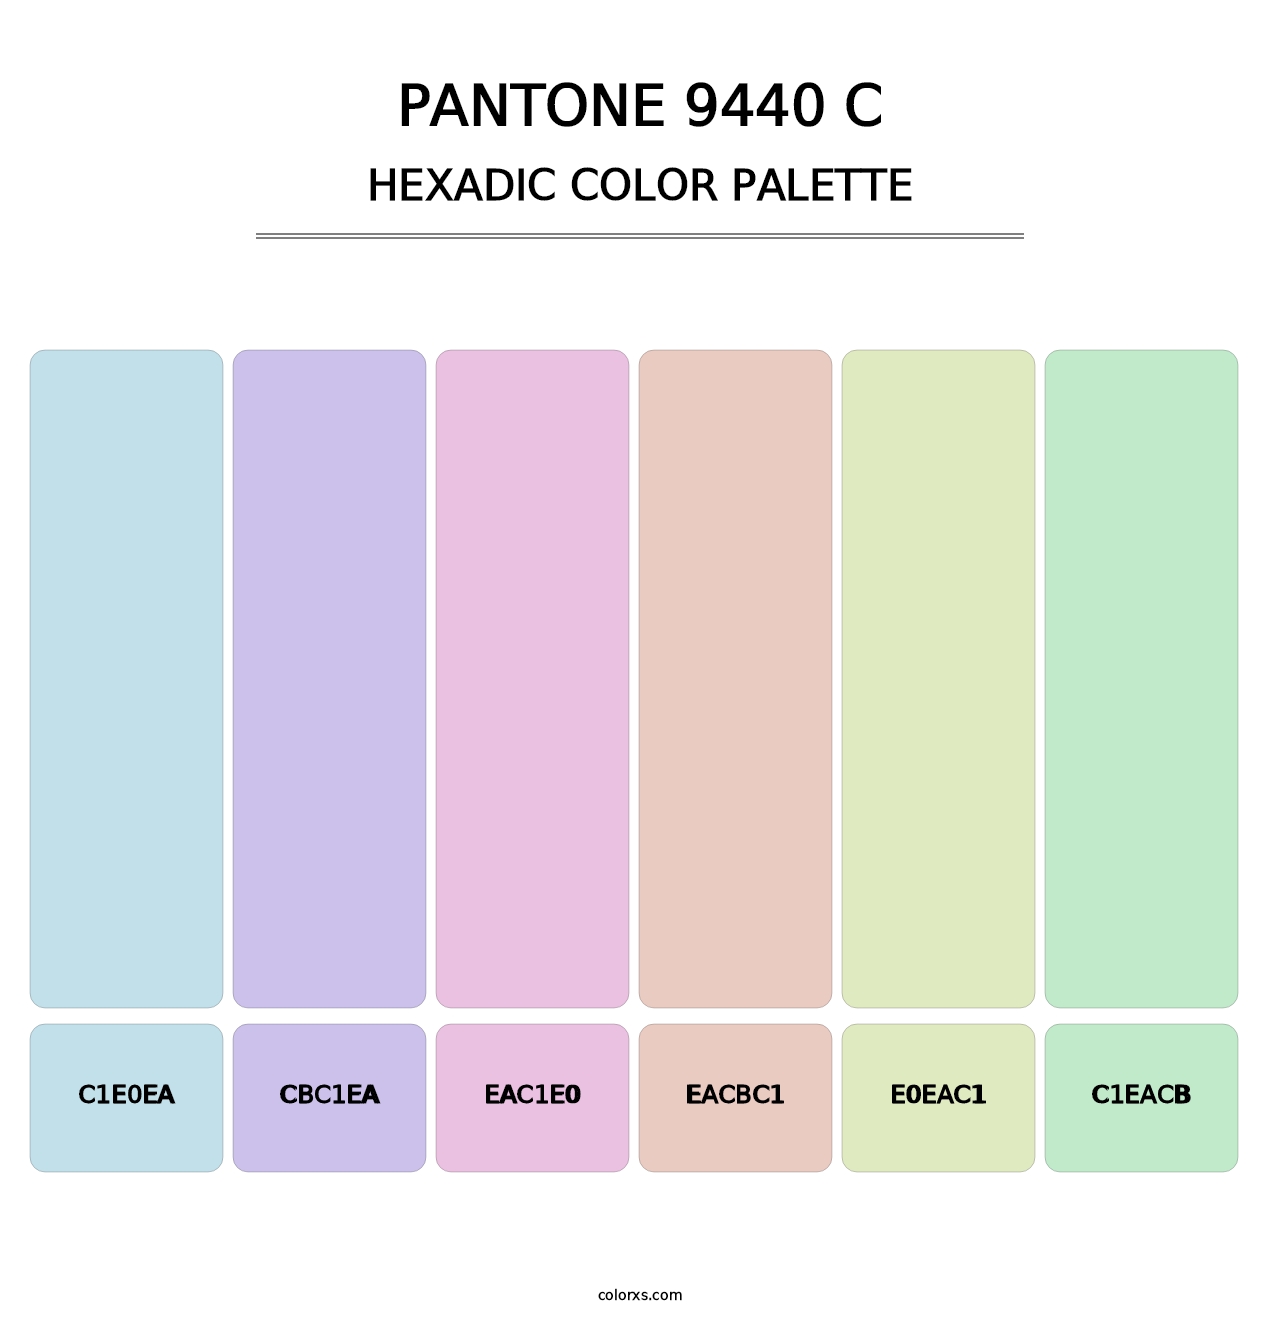 PANTONE 9440 C - Hexadic Color Palette